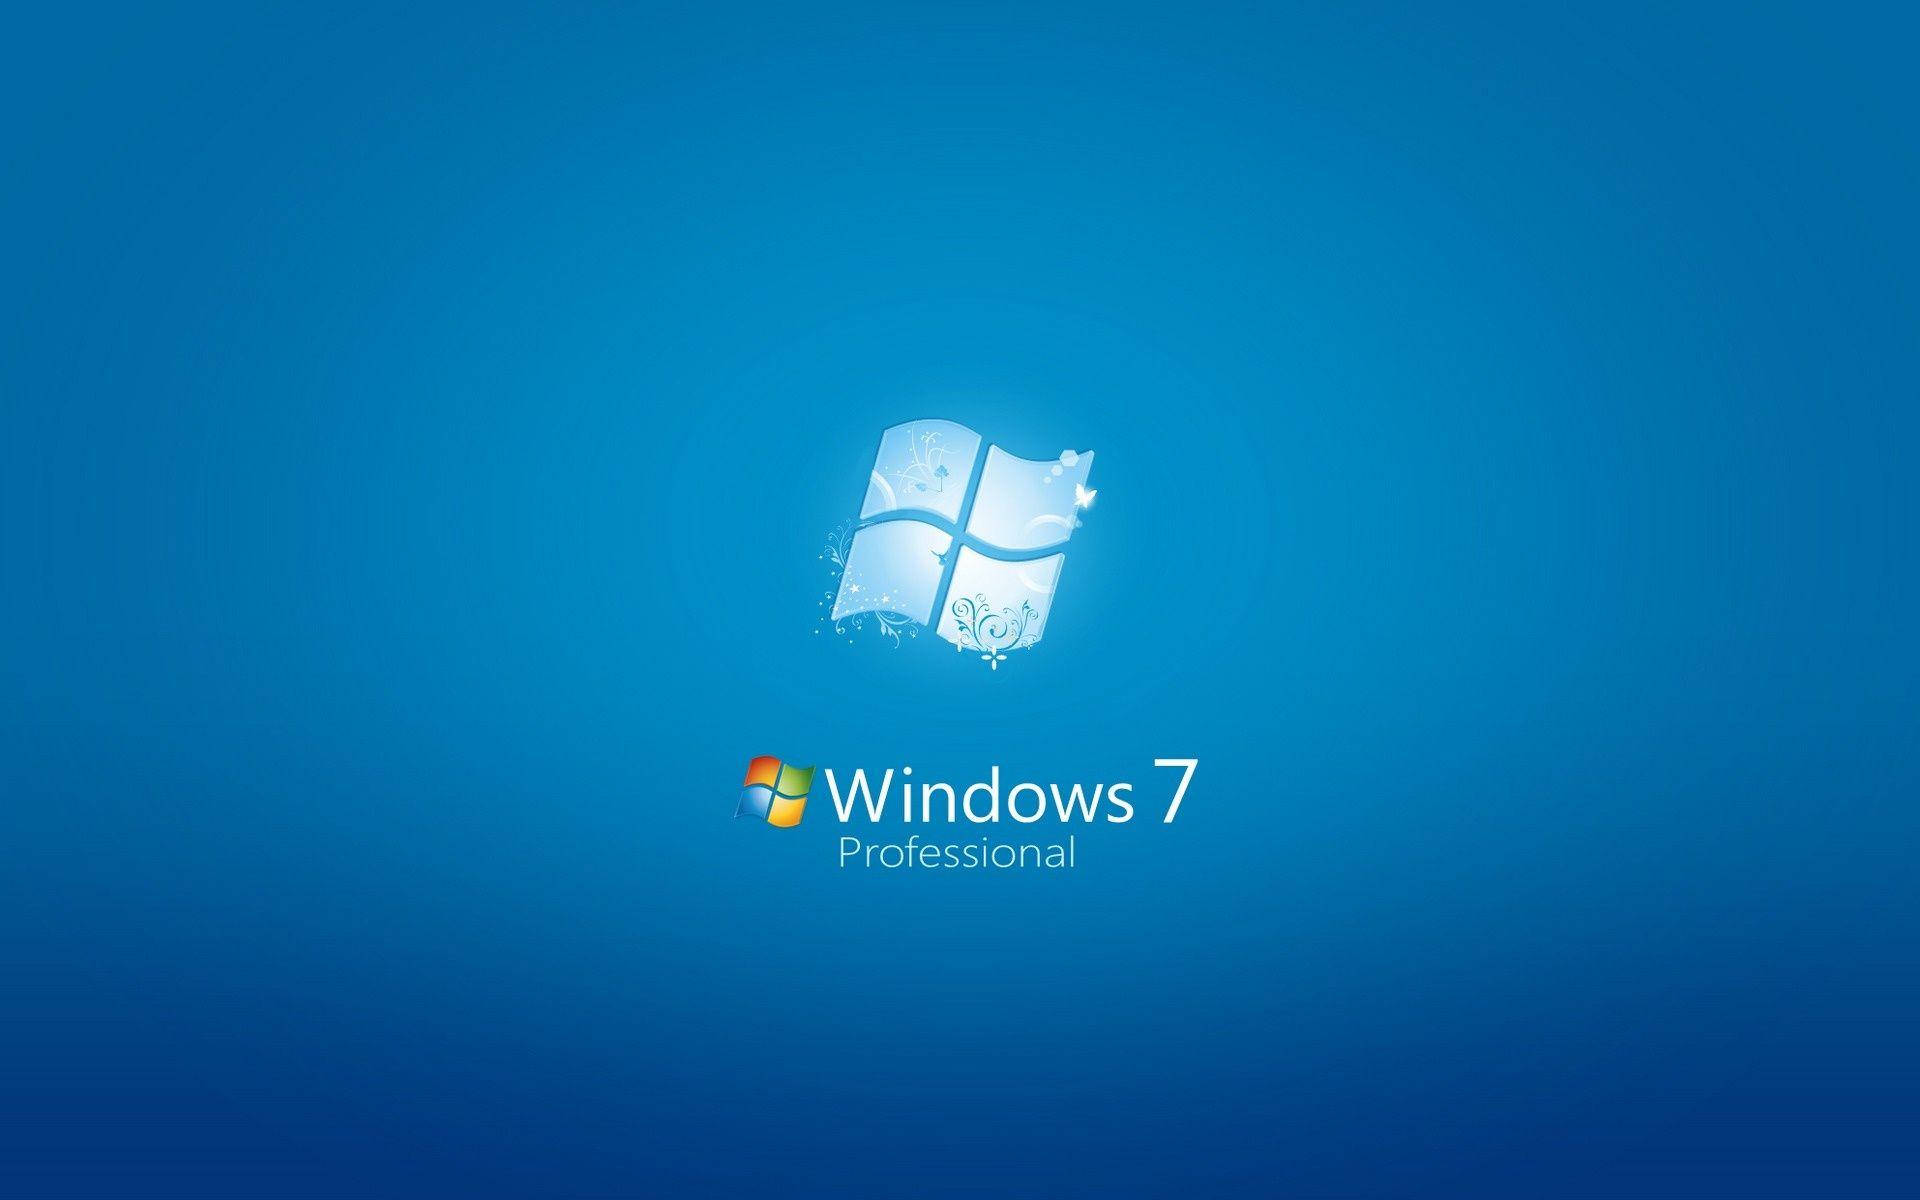 Fondos Windows 7 Professional wallpapers